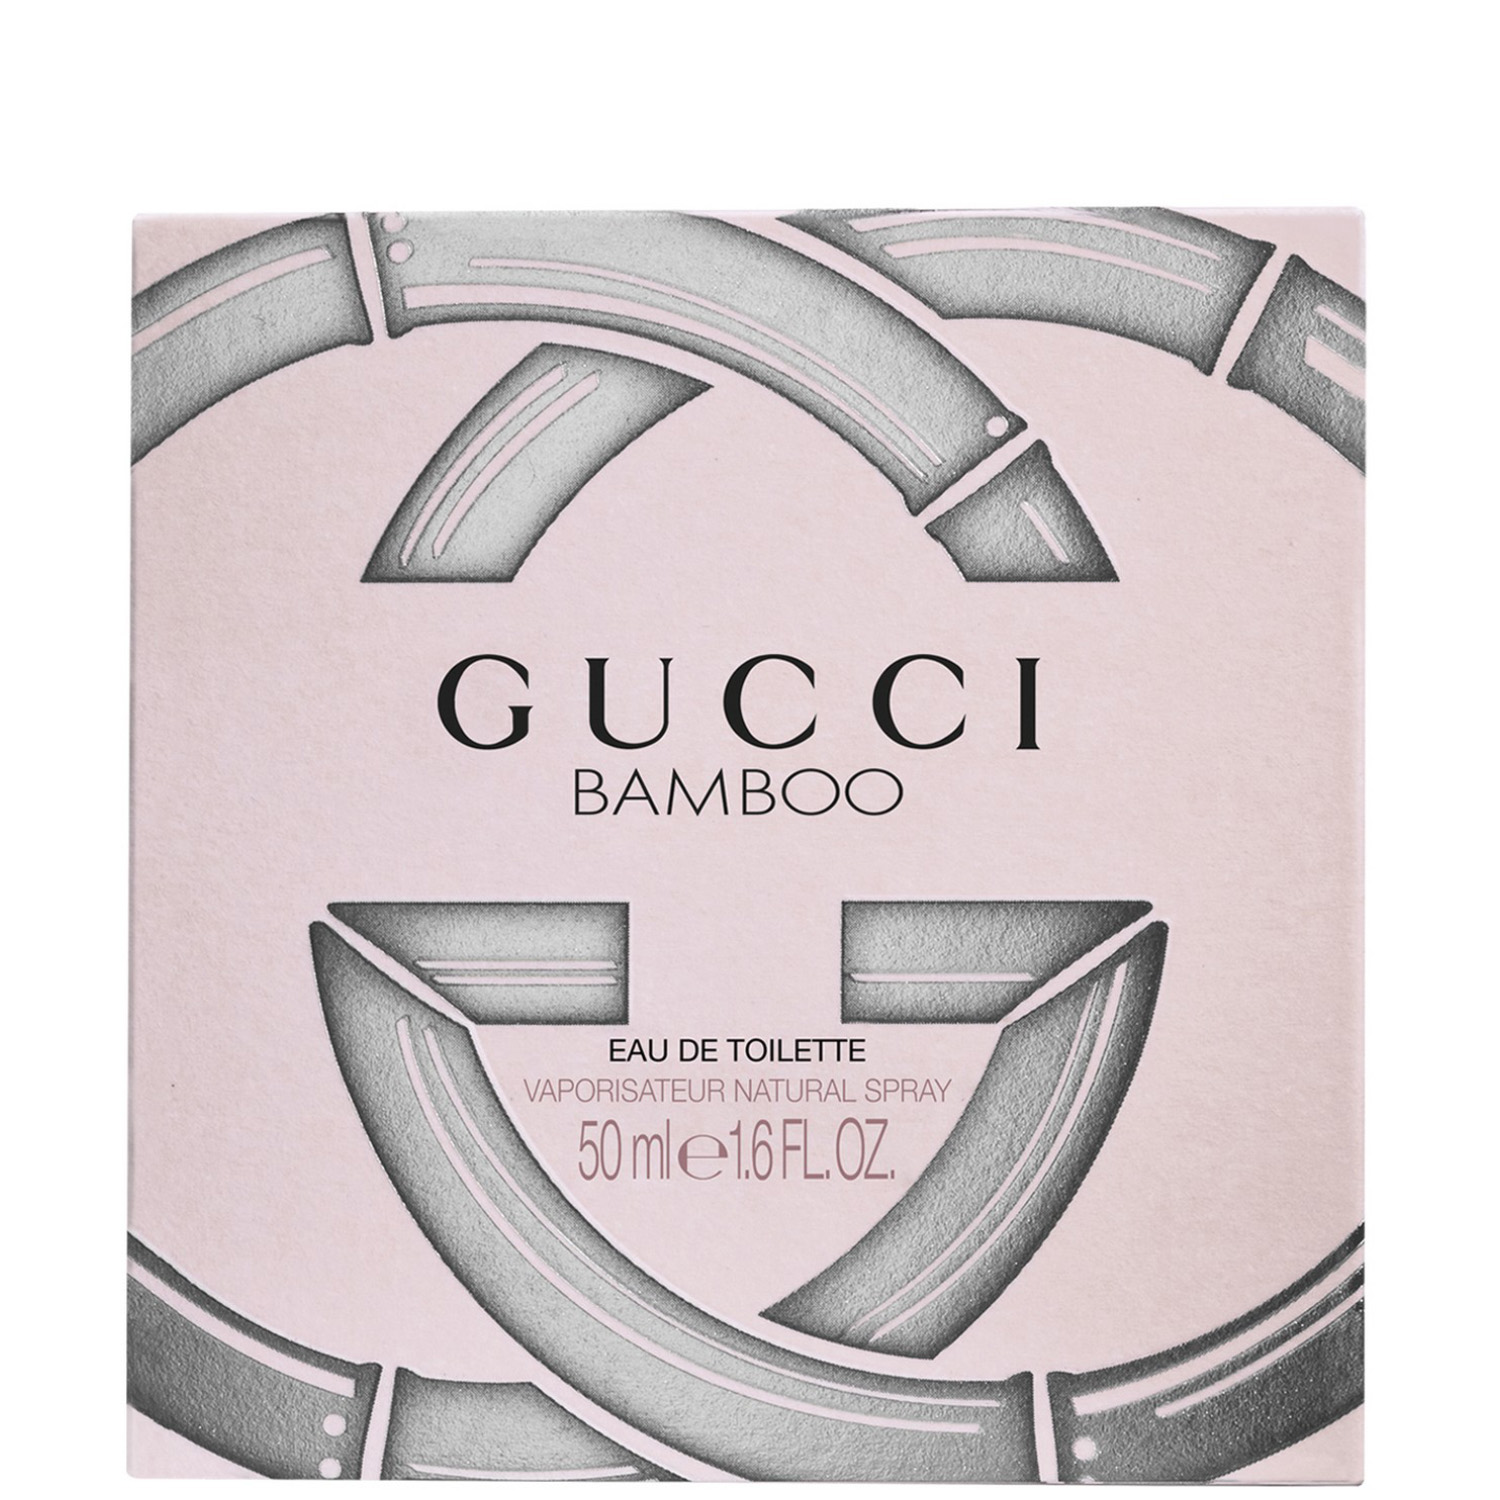 Gucci Bamboo Eau de Toilette 50ml